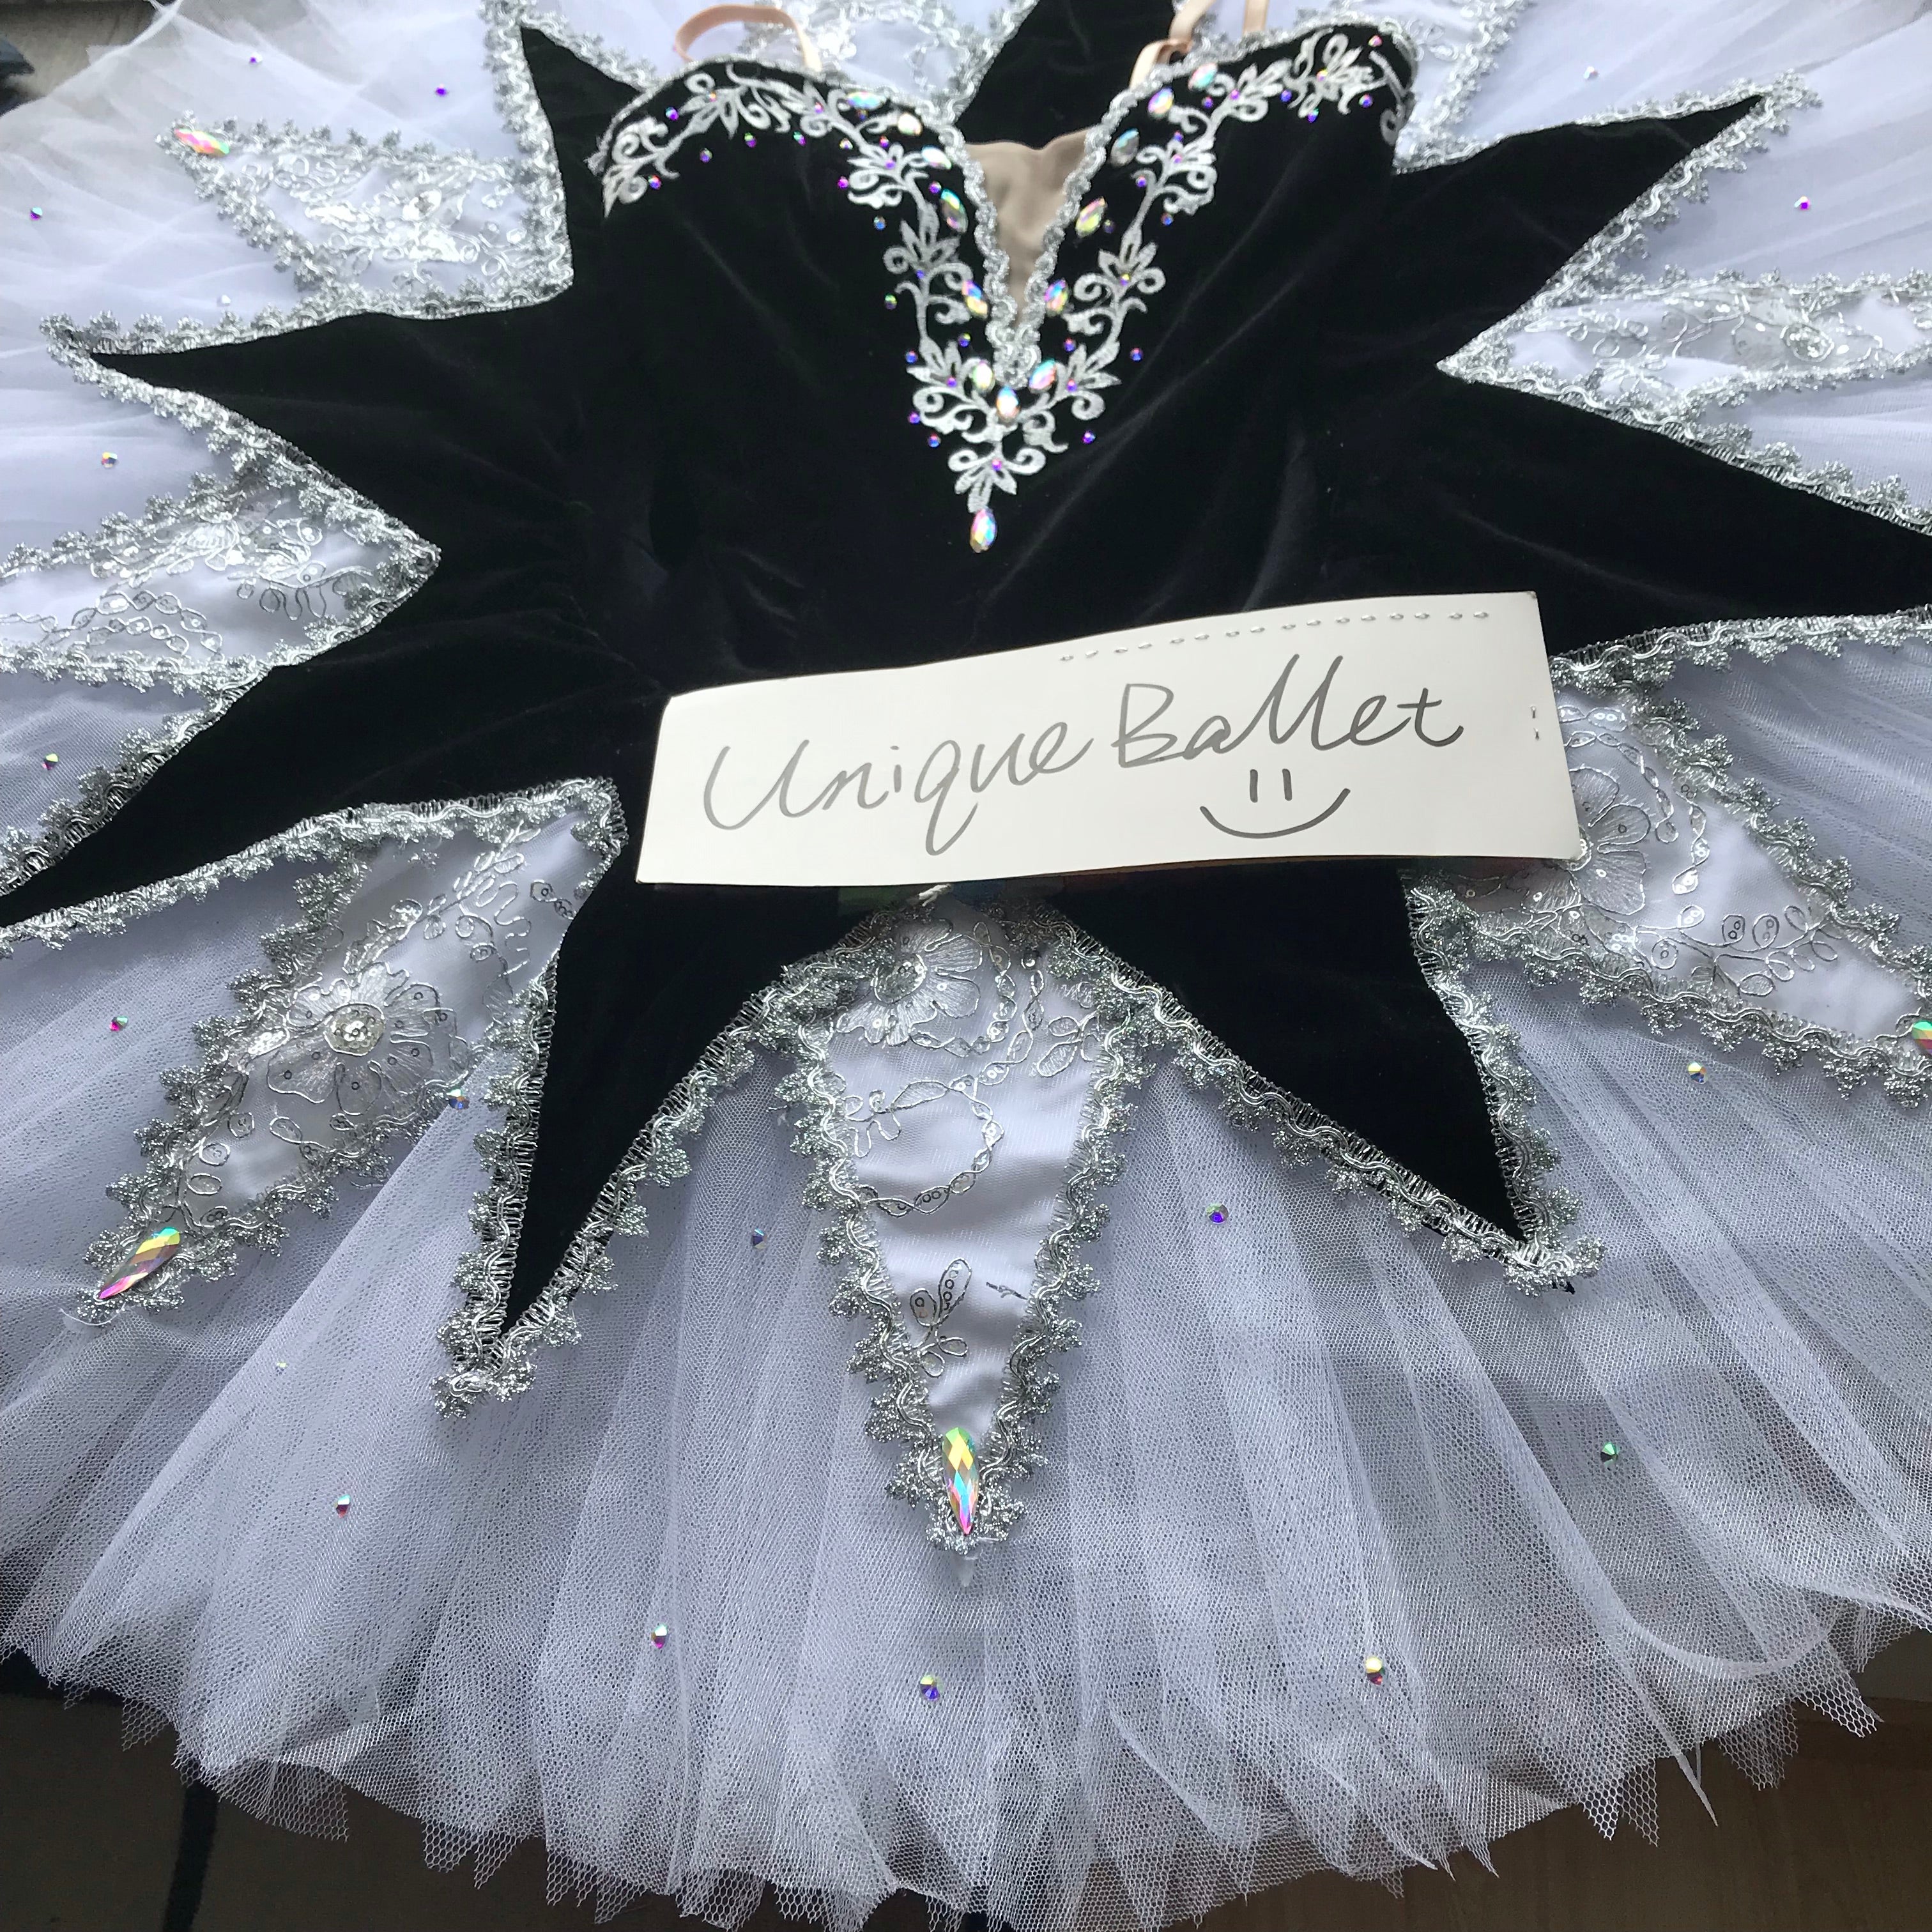 Cost-Effective Professional Les Millions d'Arlequin Classic Ballet TuTu Costume Black White Harlequinade Ballet Tutu